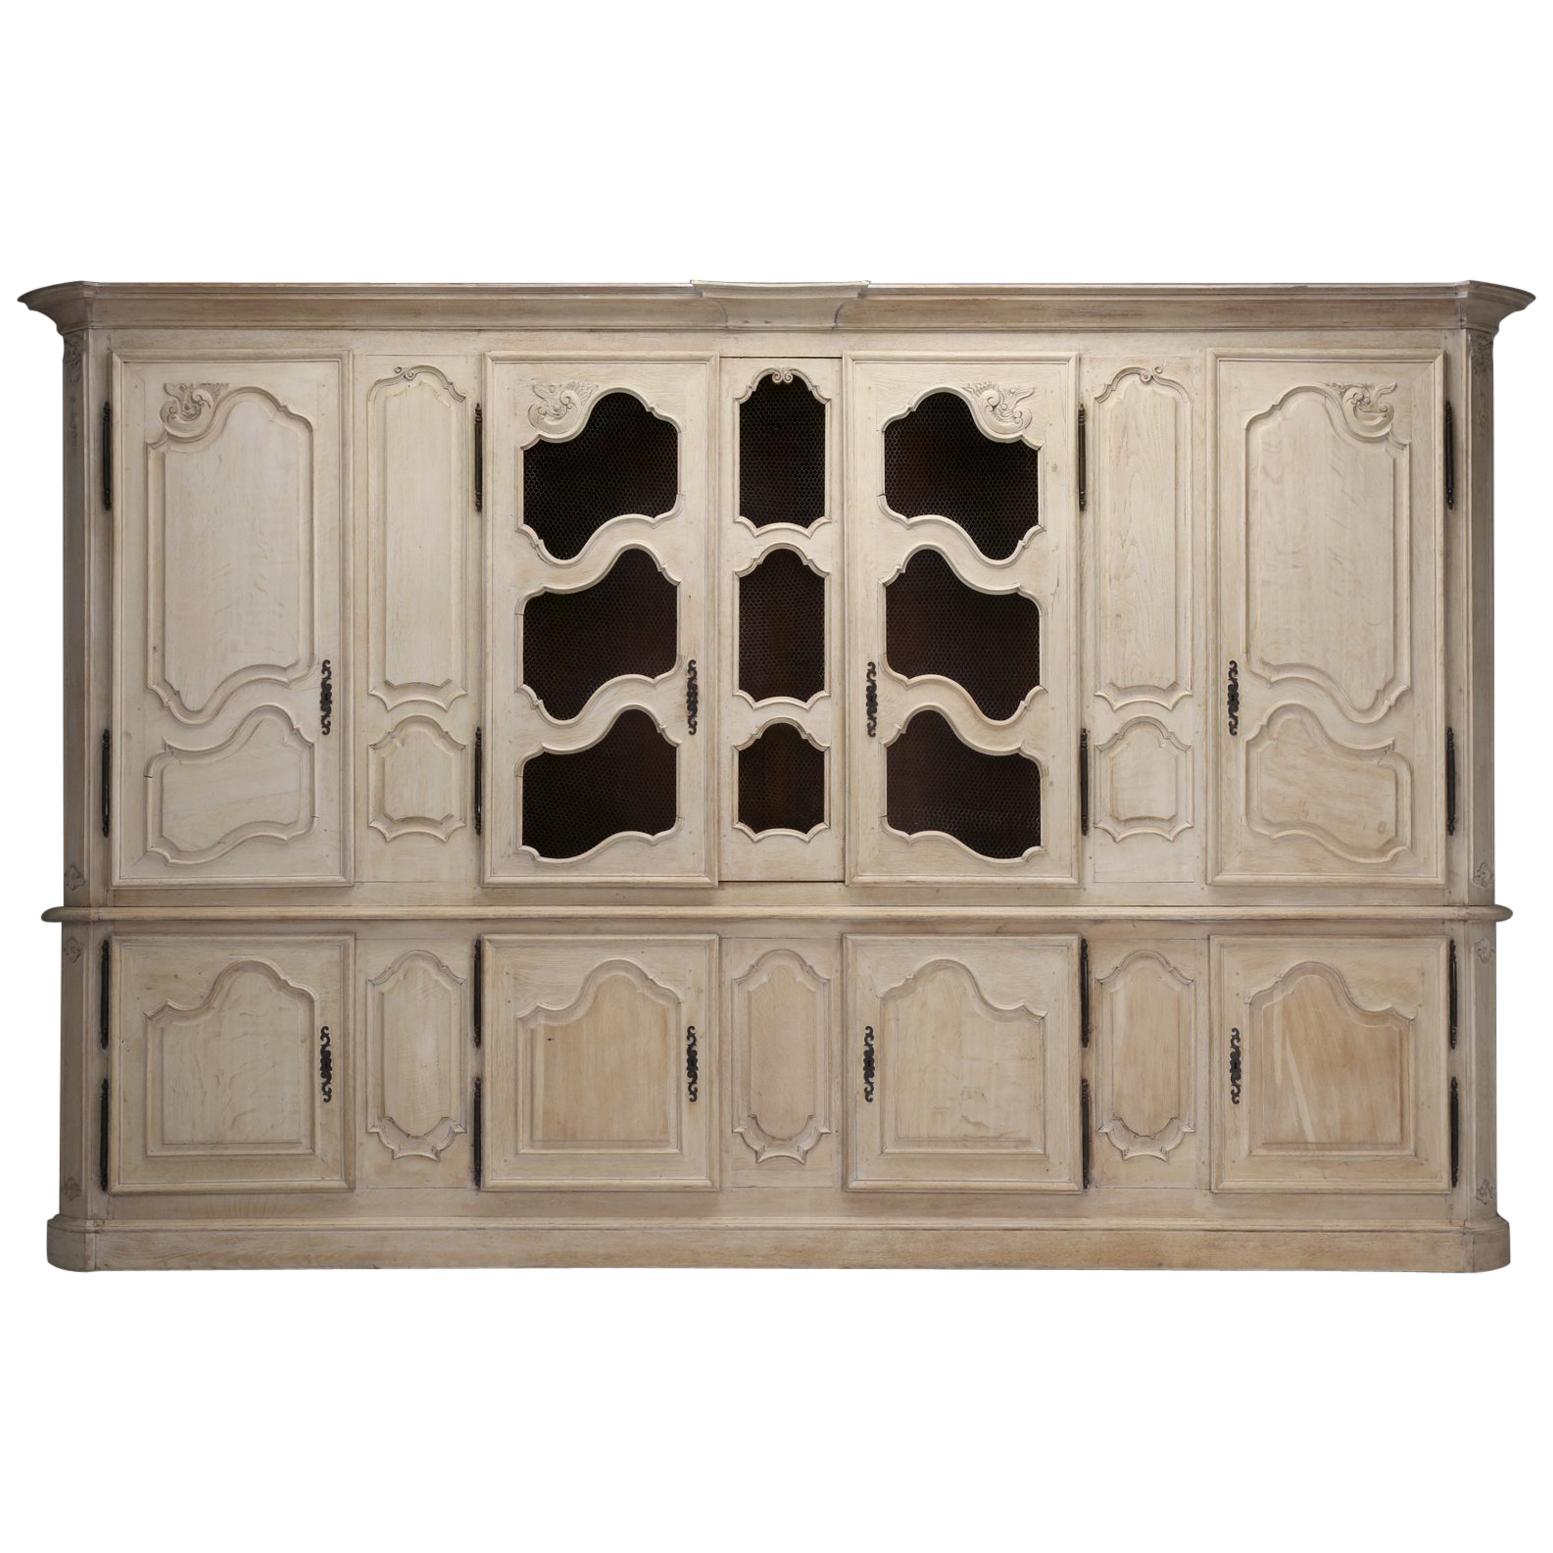 Antique French Bookcase or Cabinet in Limed White Oak Older Restoration c1800's For Sale